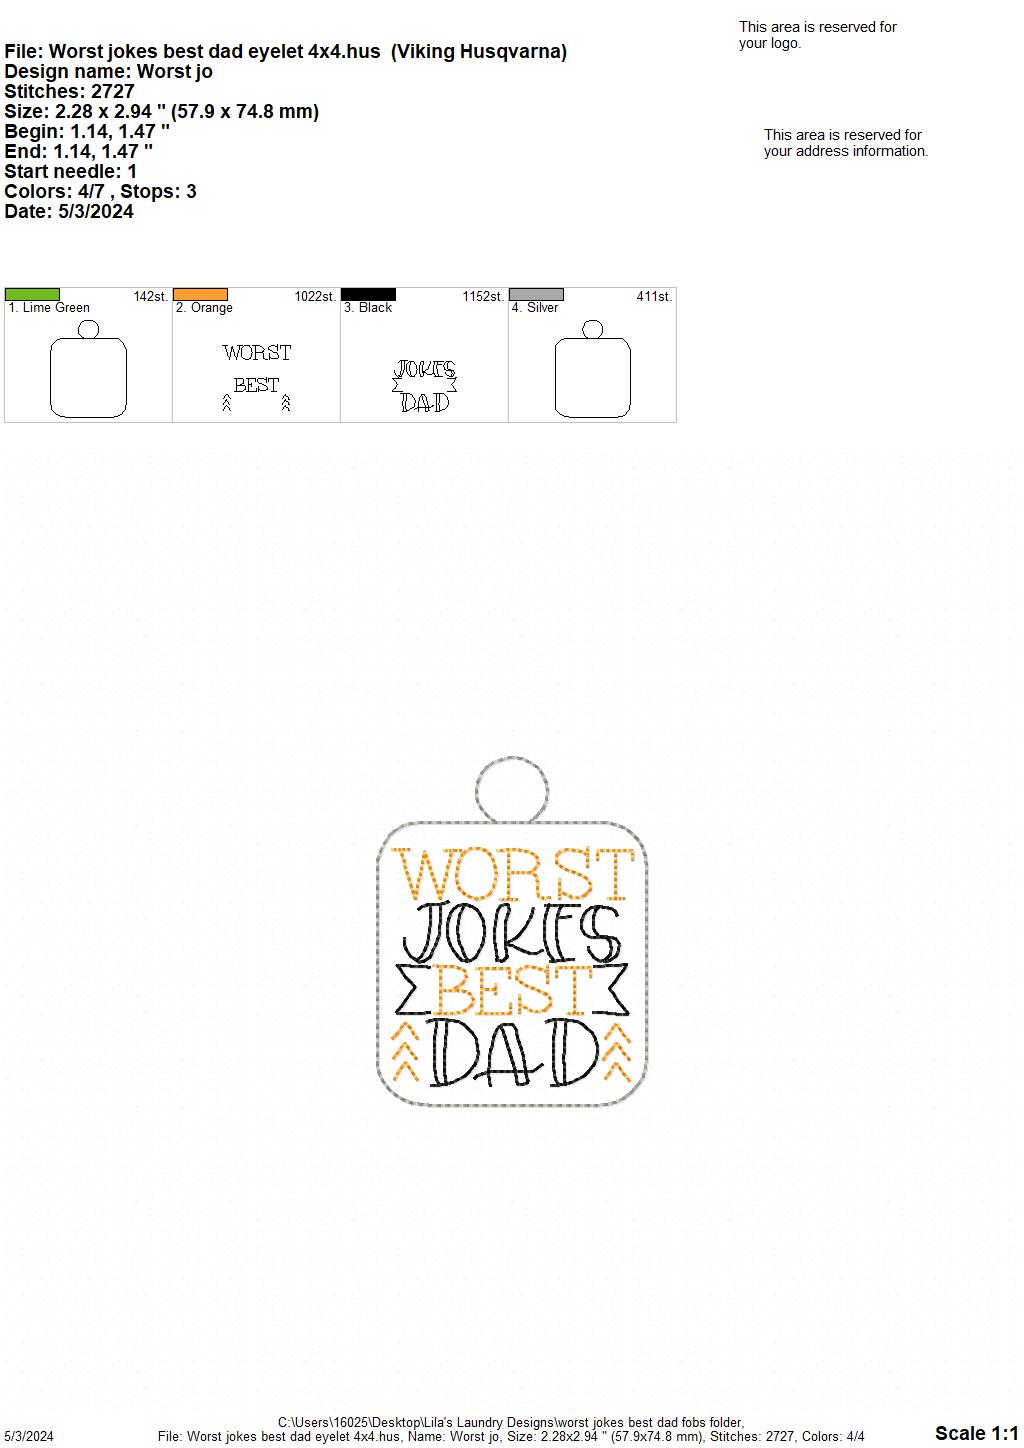 Worst Jokes Best Dad Fobs - Digital Embroidery Design